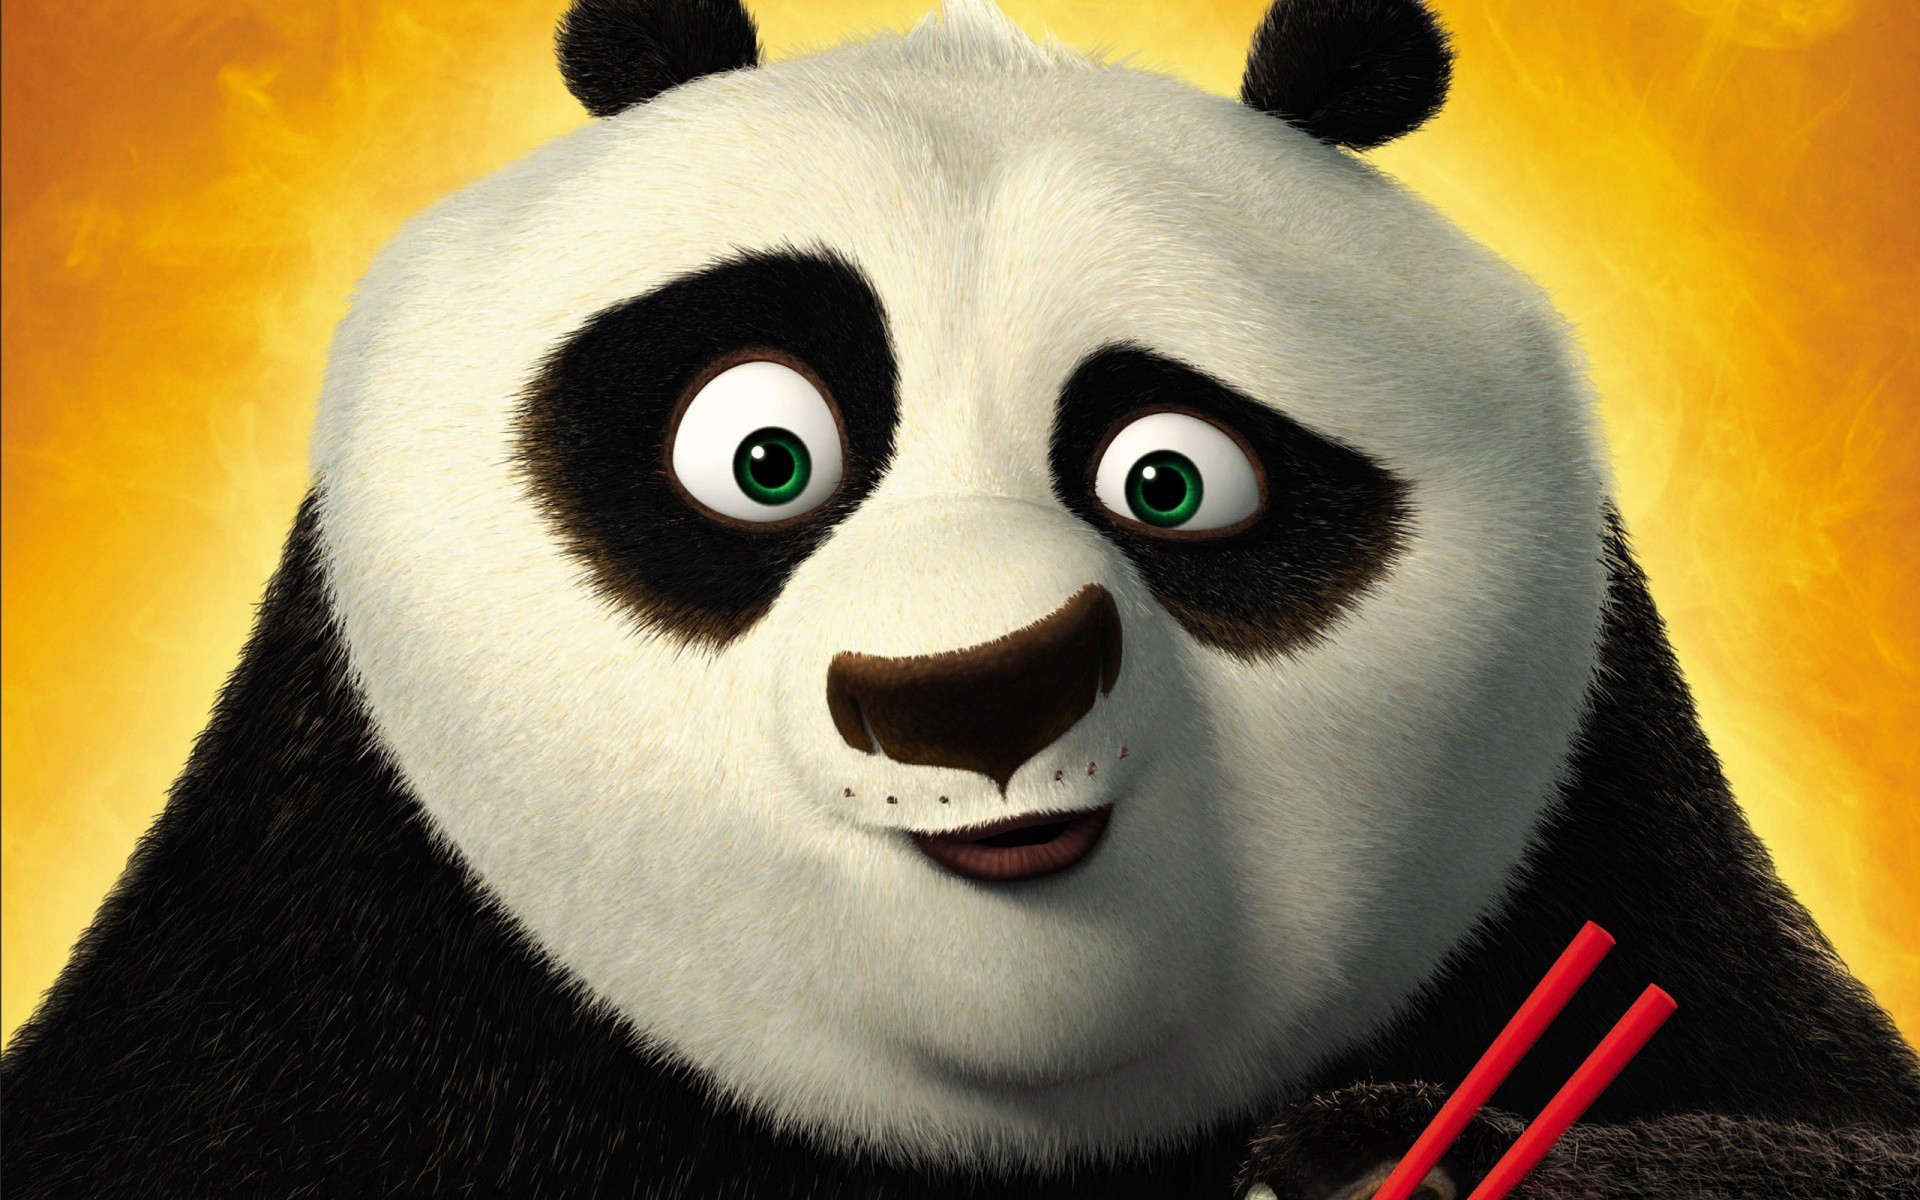 228493 descargar imagen po (kung fu panda), películas, kung fu panda 2, kung fu panda: fondos de pantalla y protectores de pantalla gratis